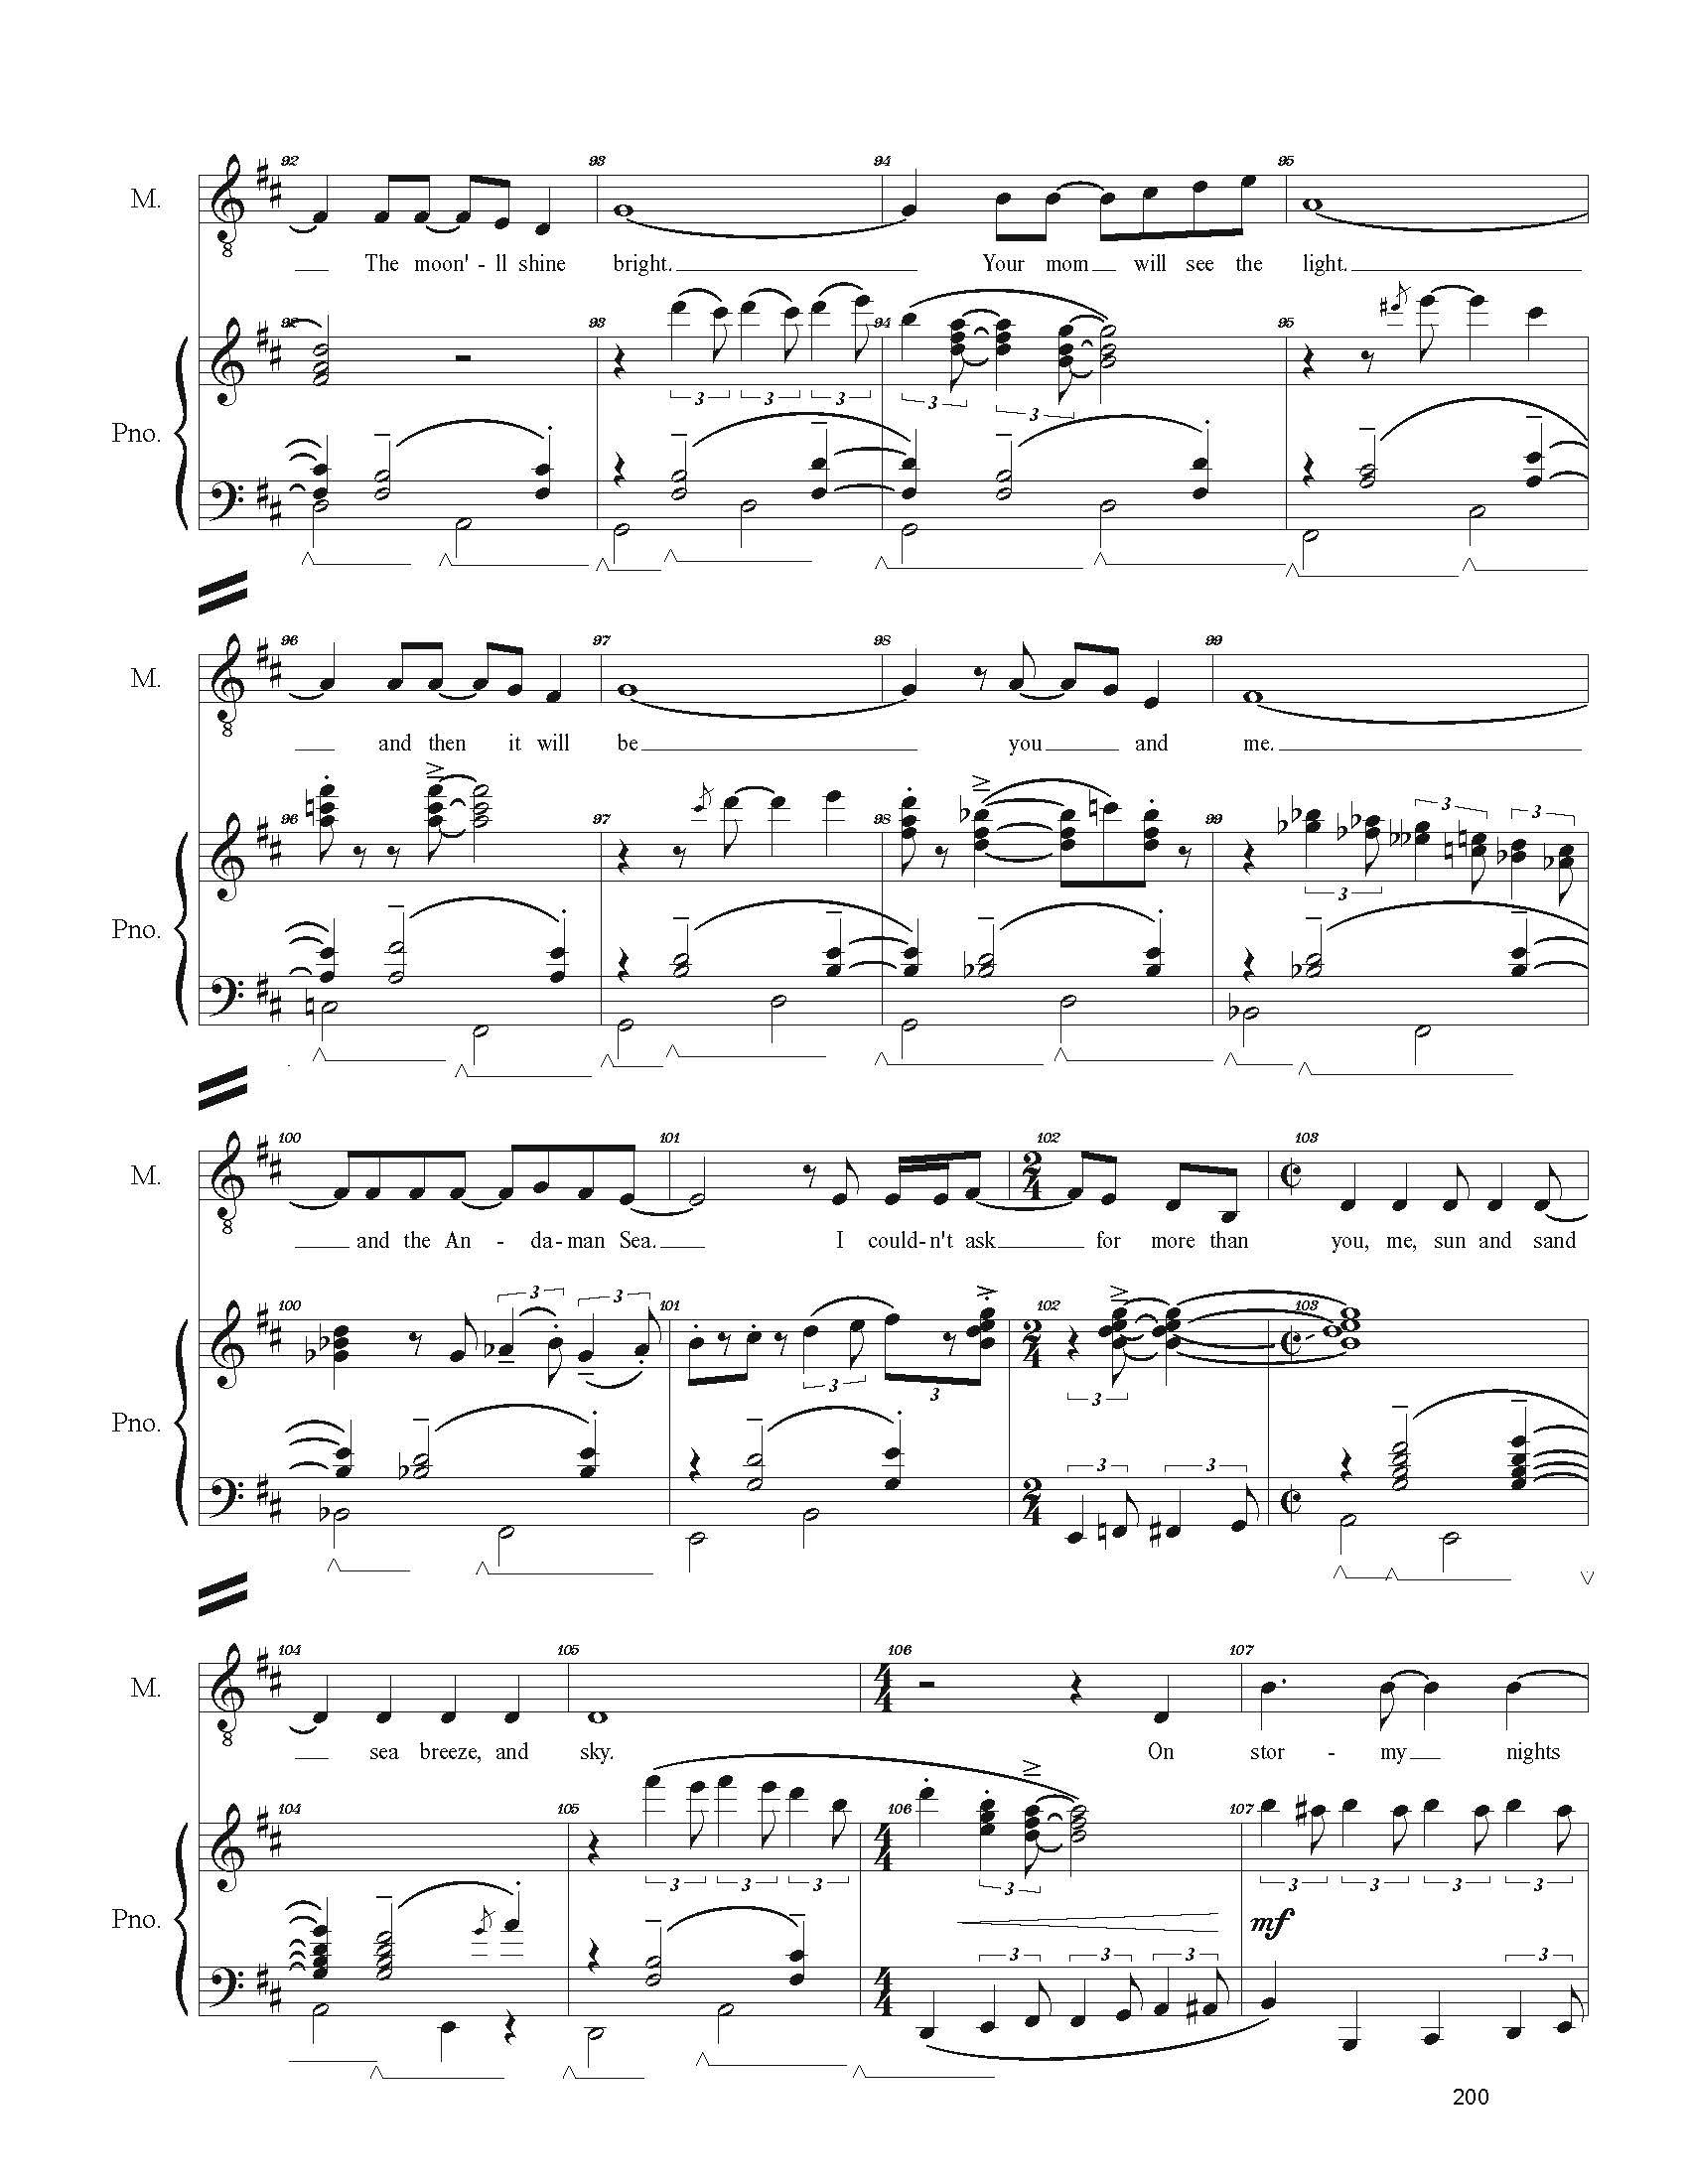 FULL PIANO VOCAL SCORE DRAFT 1 - Score_Page_200.jpg